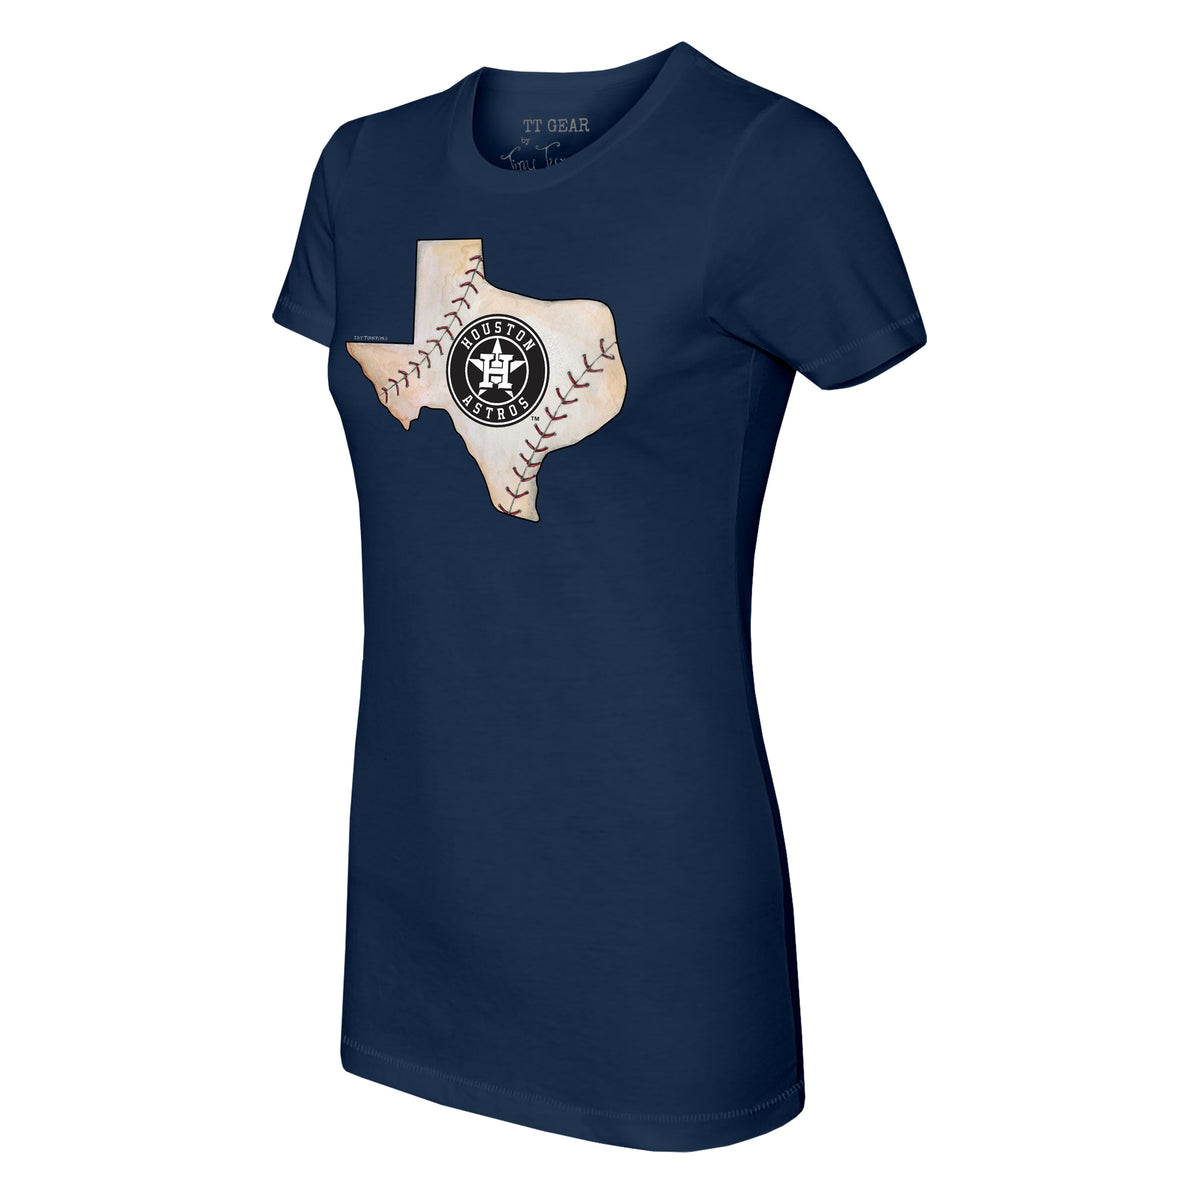 Houston Astros Heart Lolly Tee Shirt Women's XL / Navy Blue